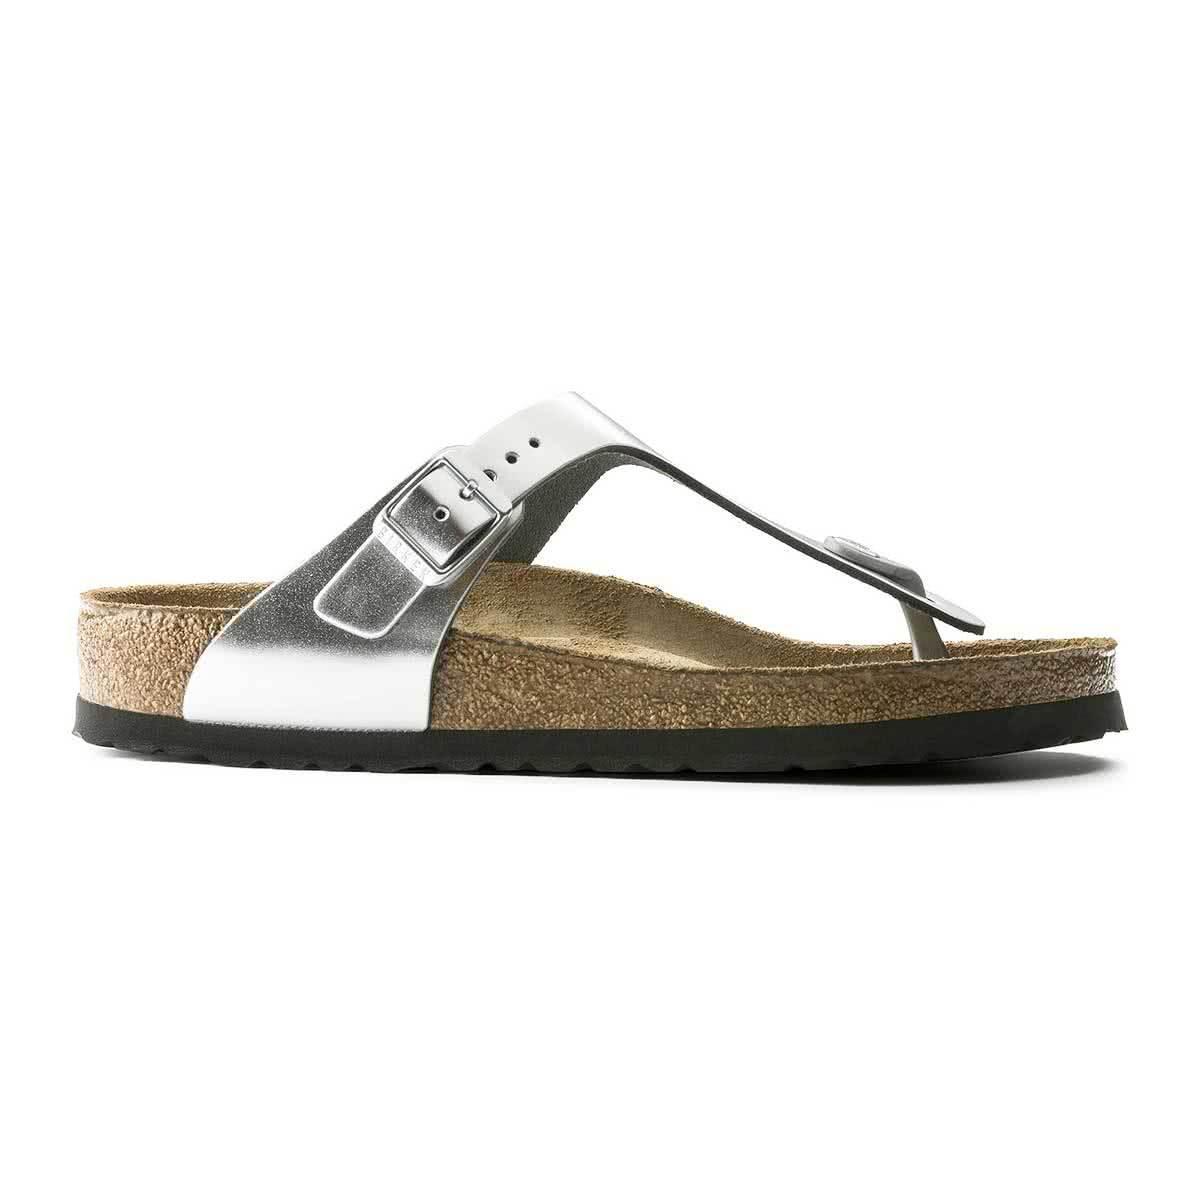 Birkenstock Gizeh Natural Leather Soft Footbed Sandals - Regular - The Next Pair